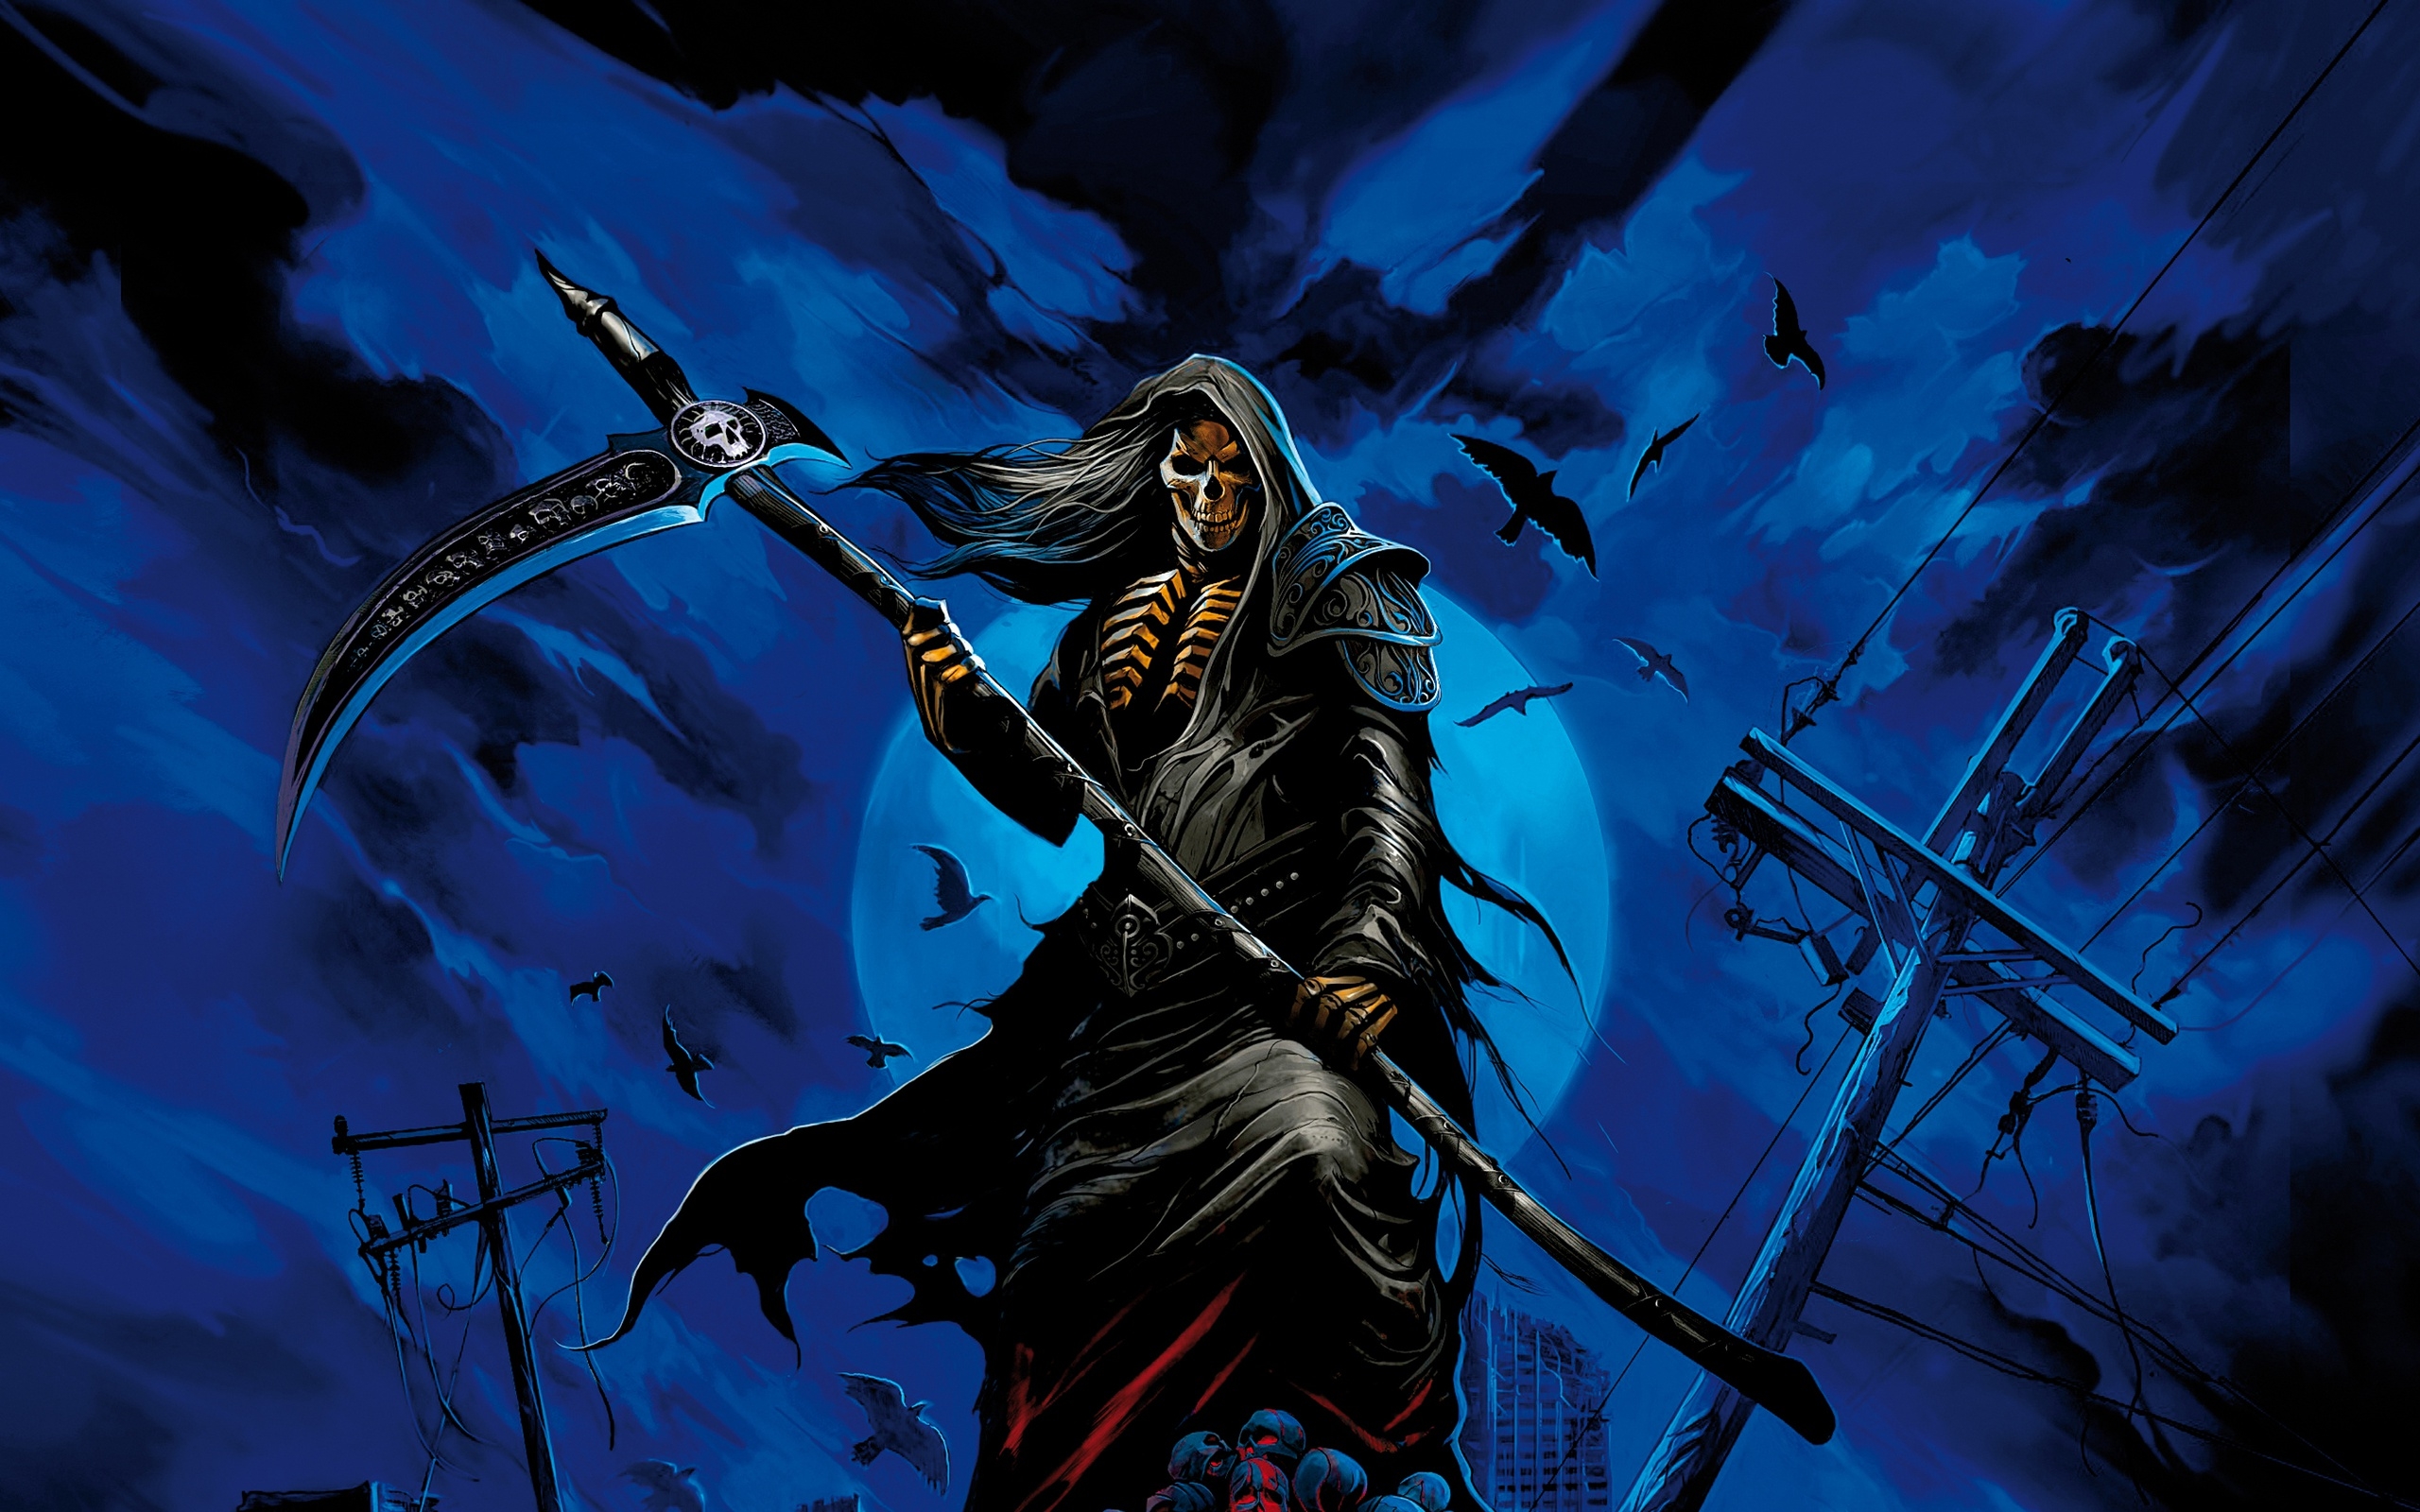 1920x10801148 Dark Grim Reaper Hd Cool 1920x10801148 Resolution Wallpaper Hd Fantasy 4k